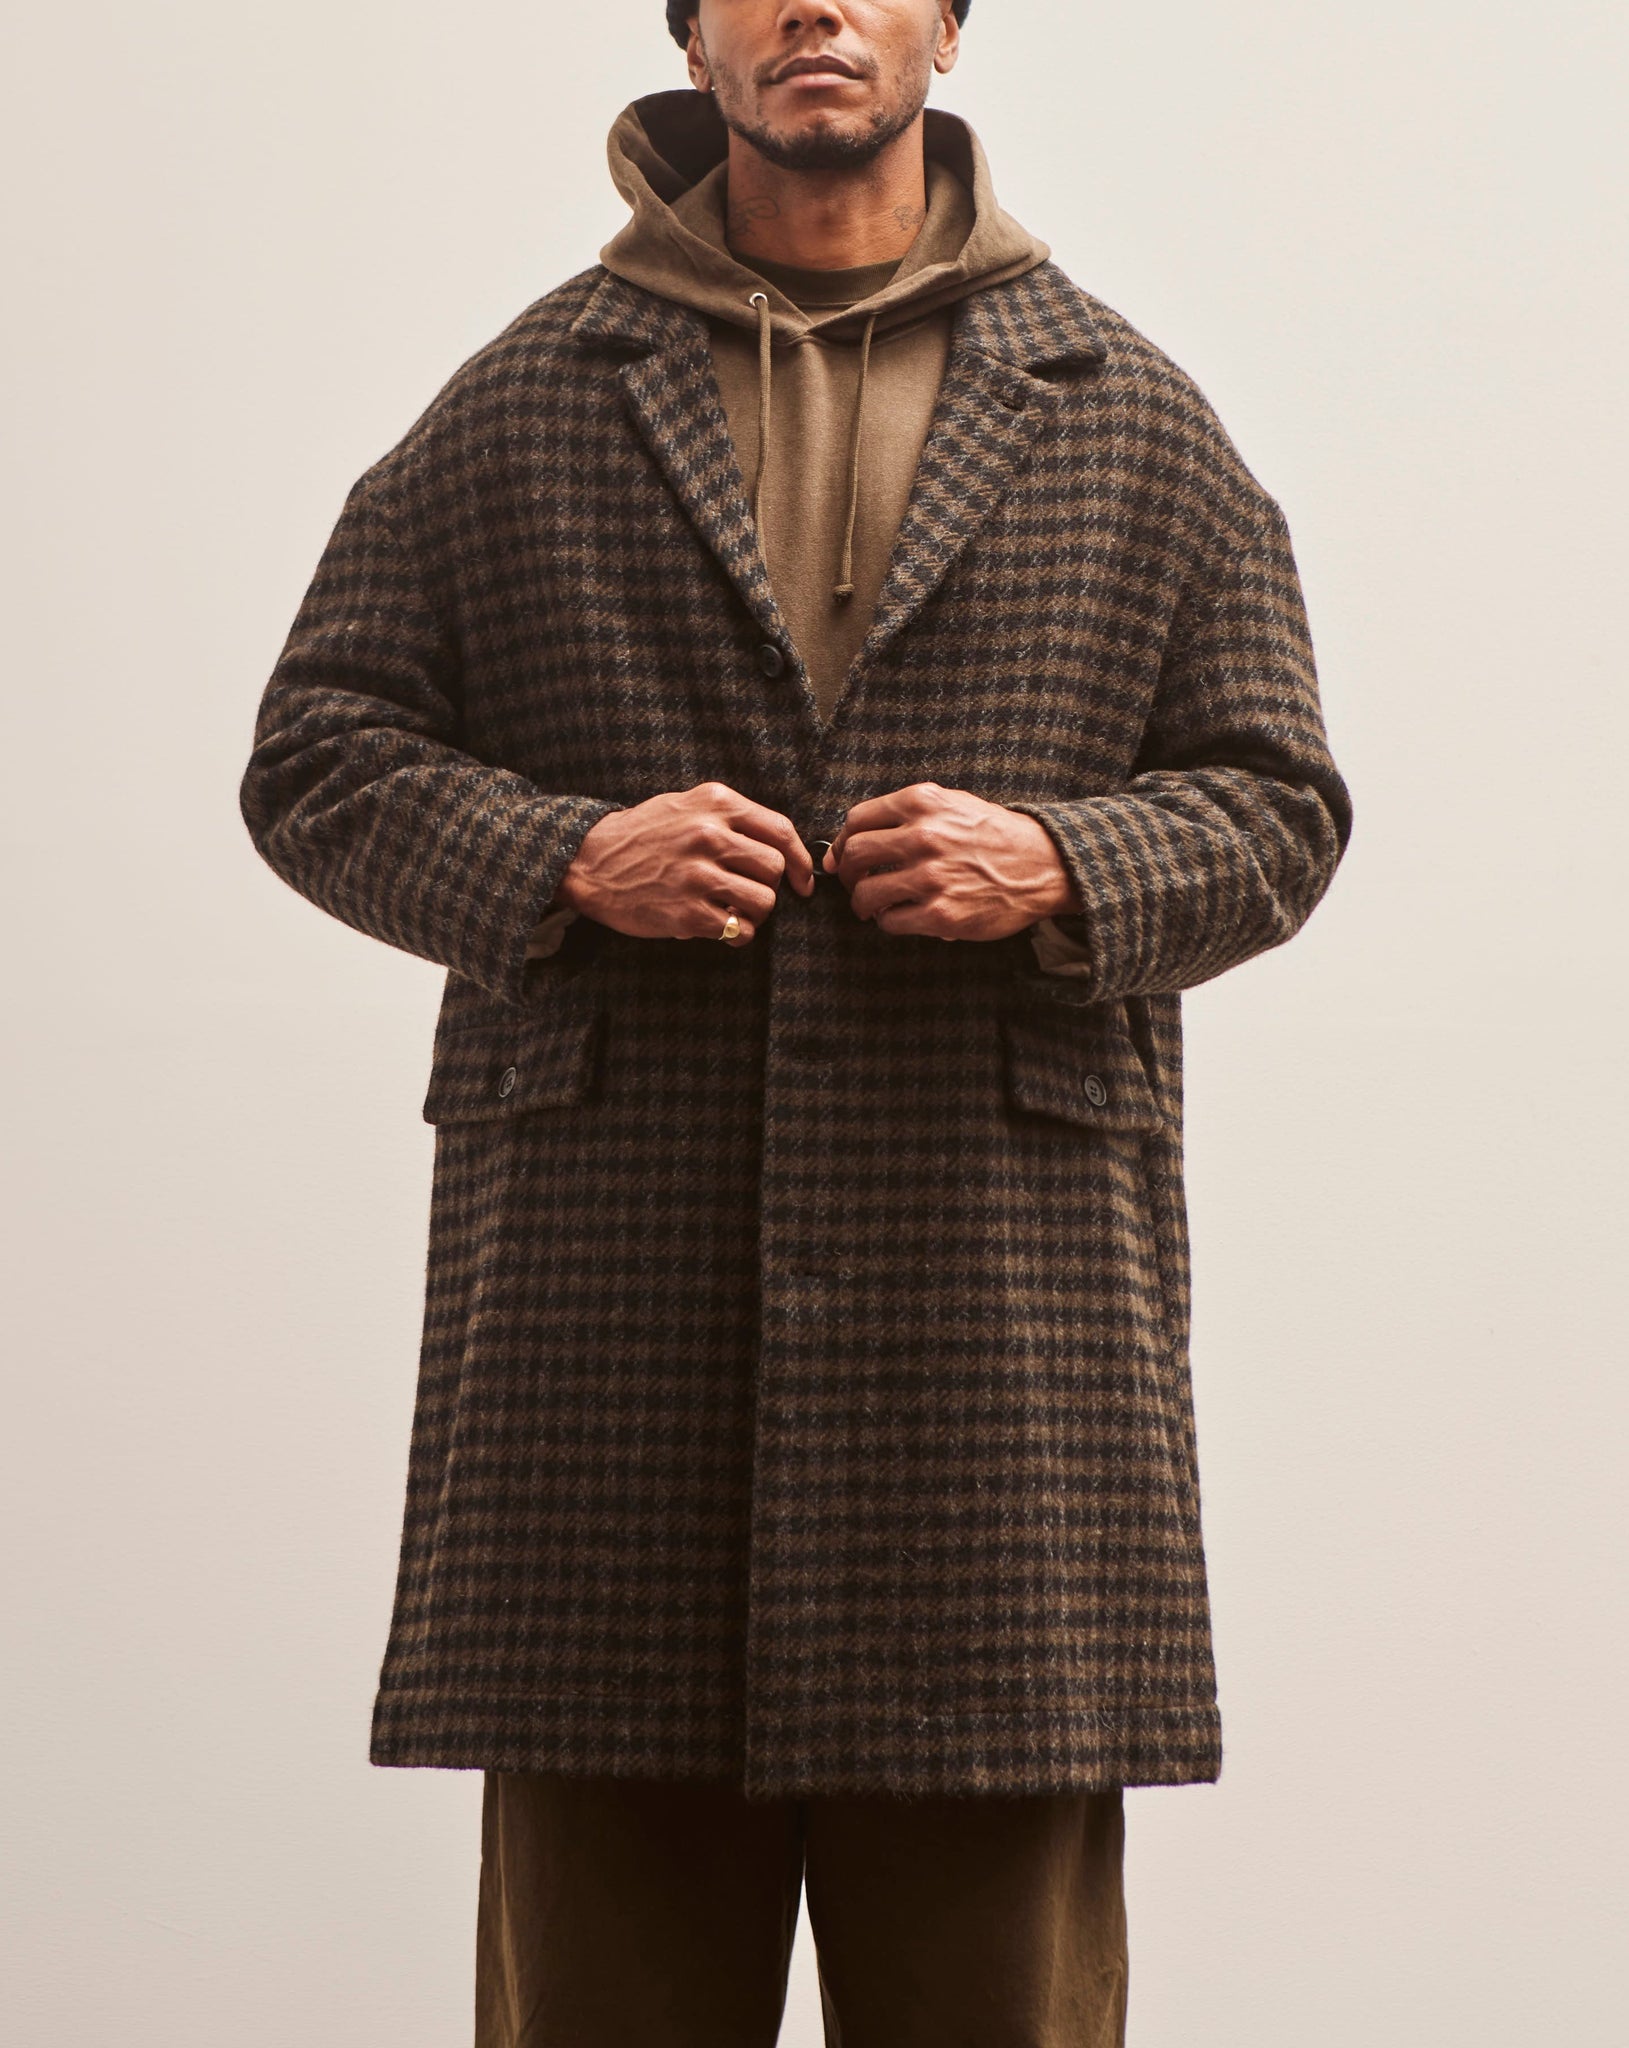 Evan Kinori Big Coat, Dark Olive Heavy Brushed Wool Check